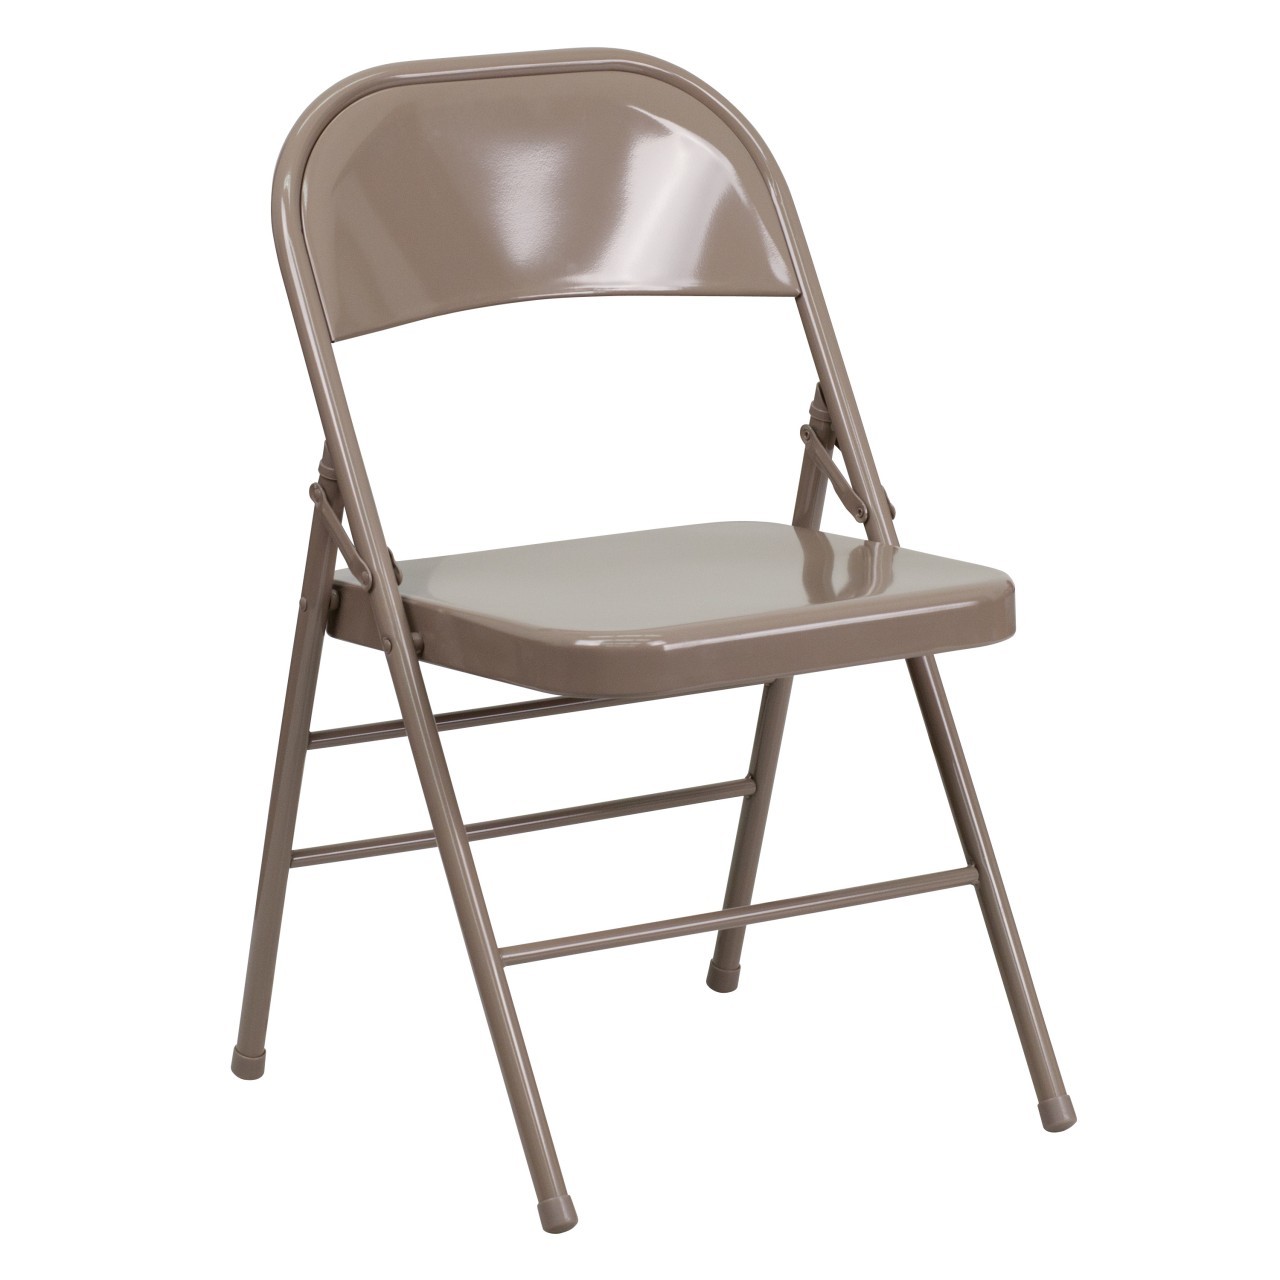 Metal folding chair gray 1280 1280